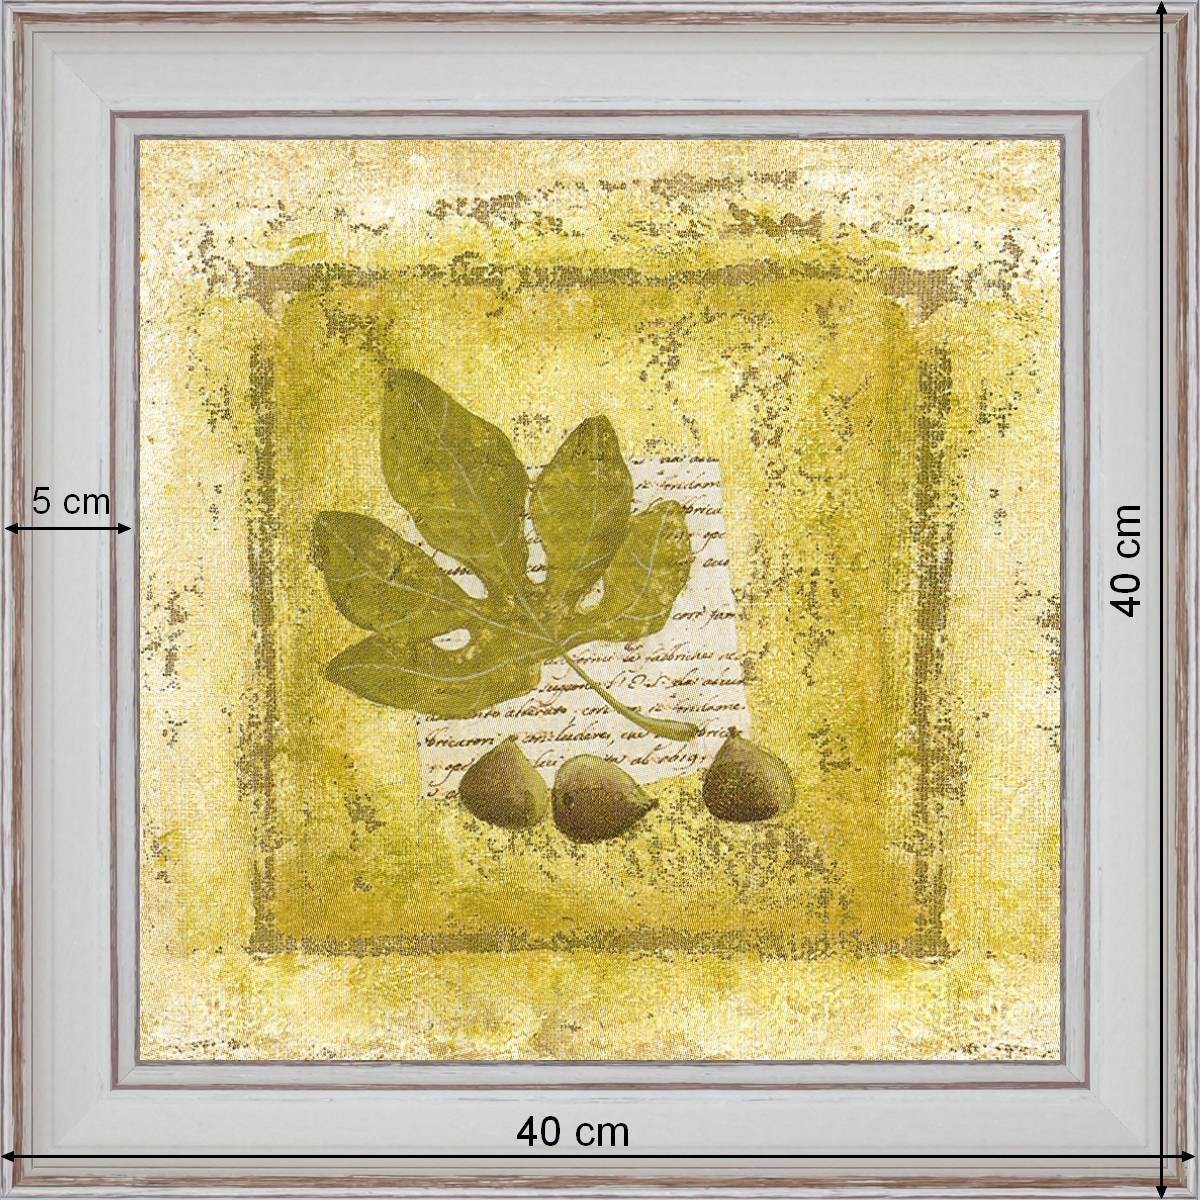 Figs - dimensions 40 x 40 cm